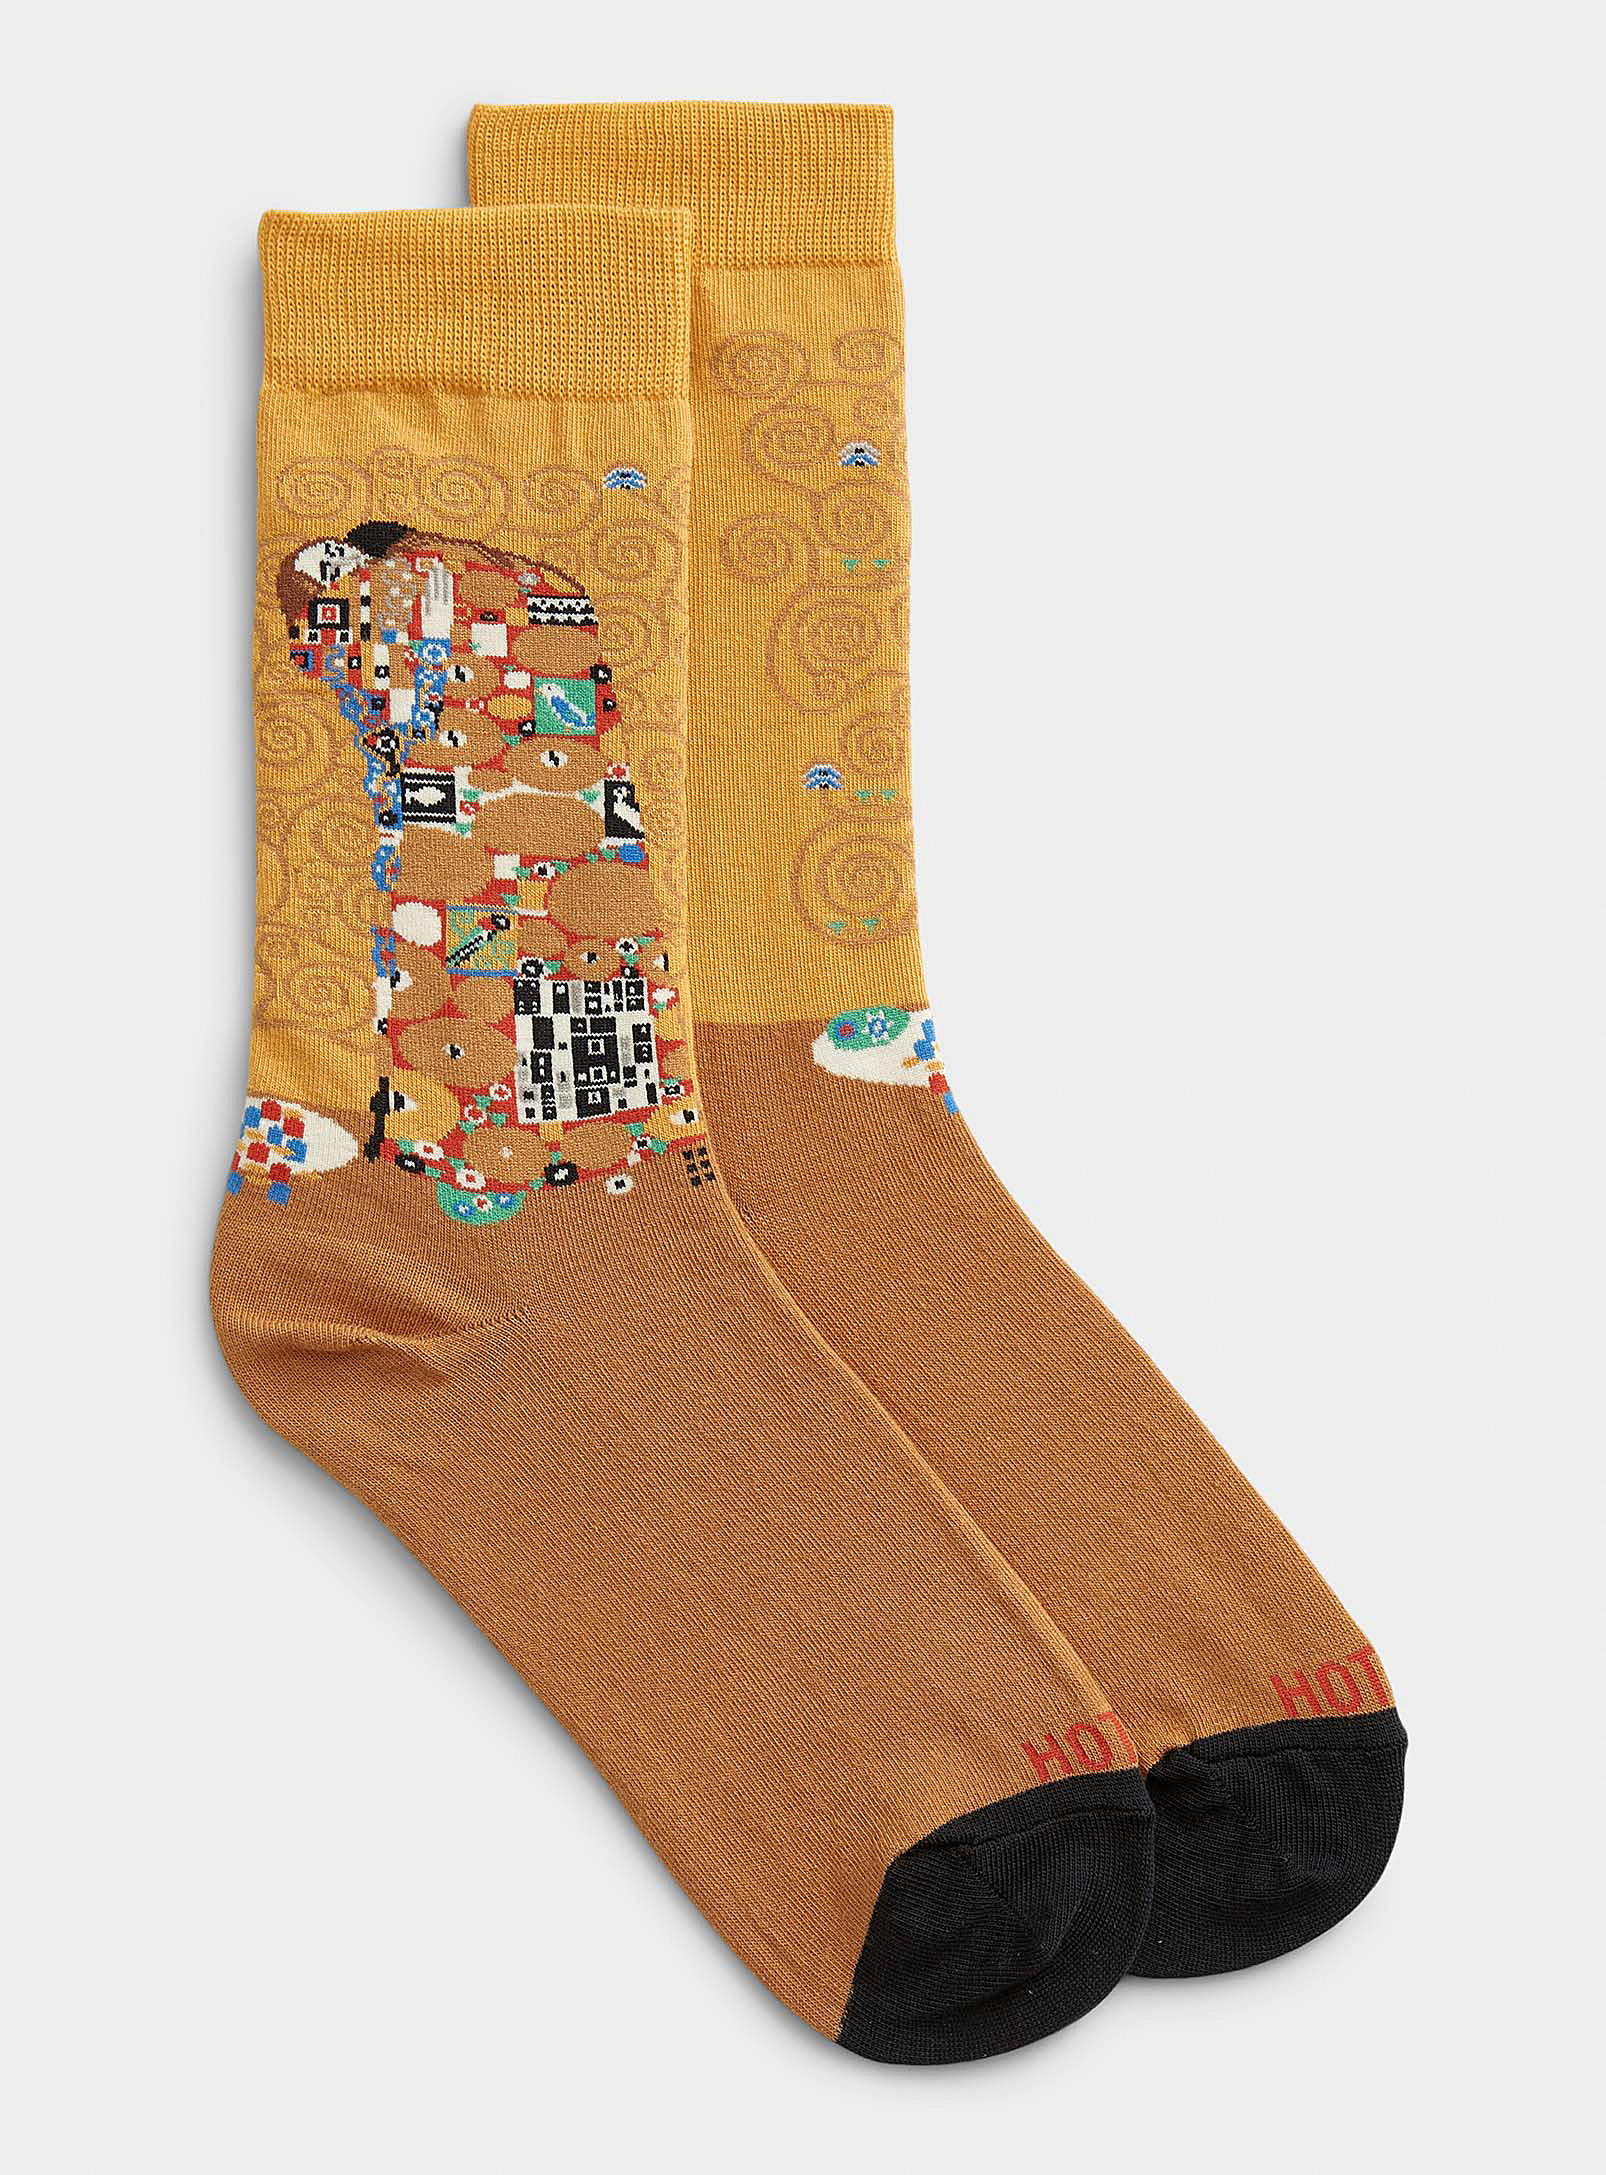 Hot Sox Gustave Klimt's Fulfillment Sock In Neutral